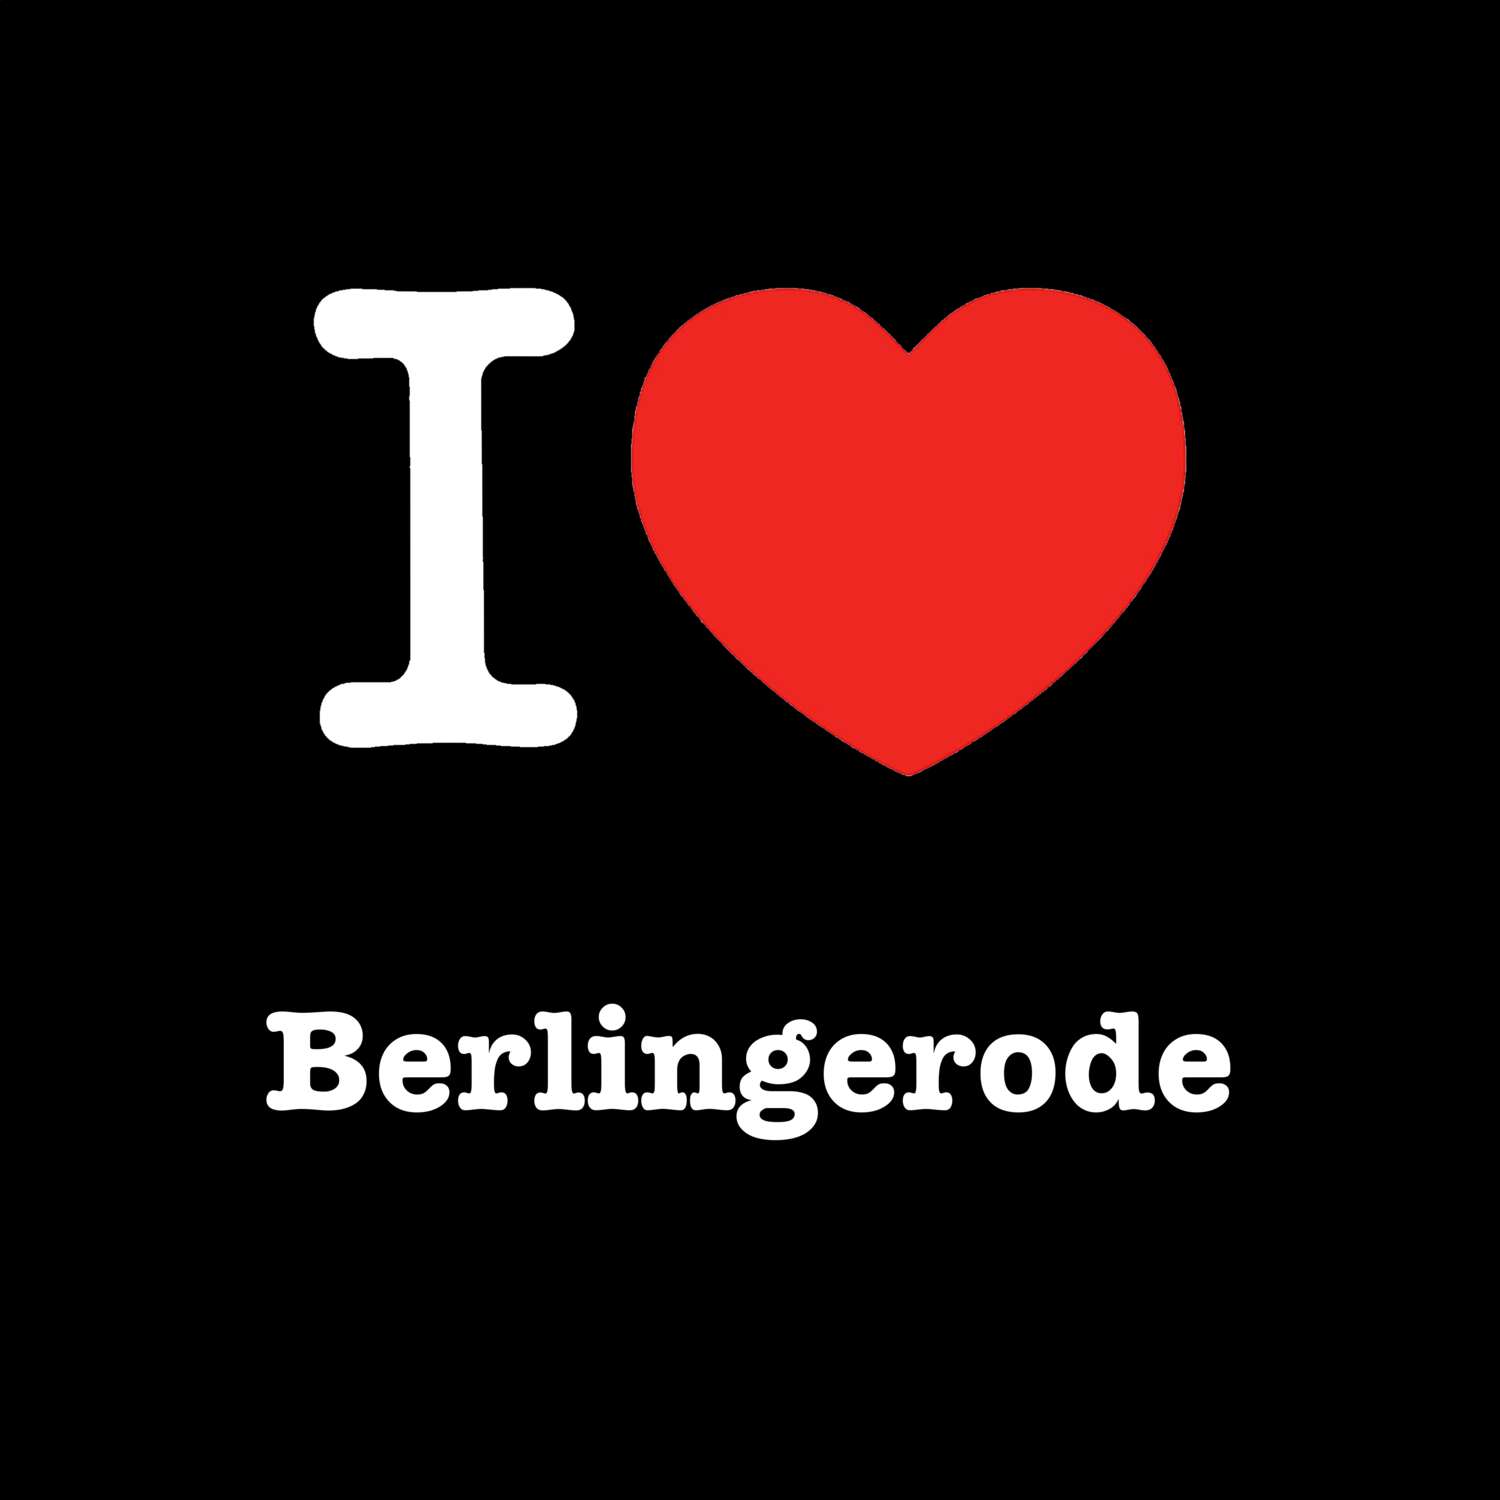 Berlingerode T-Shirt »I love«